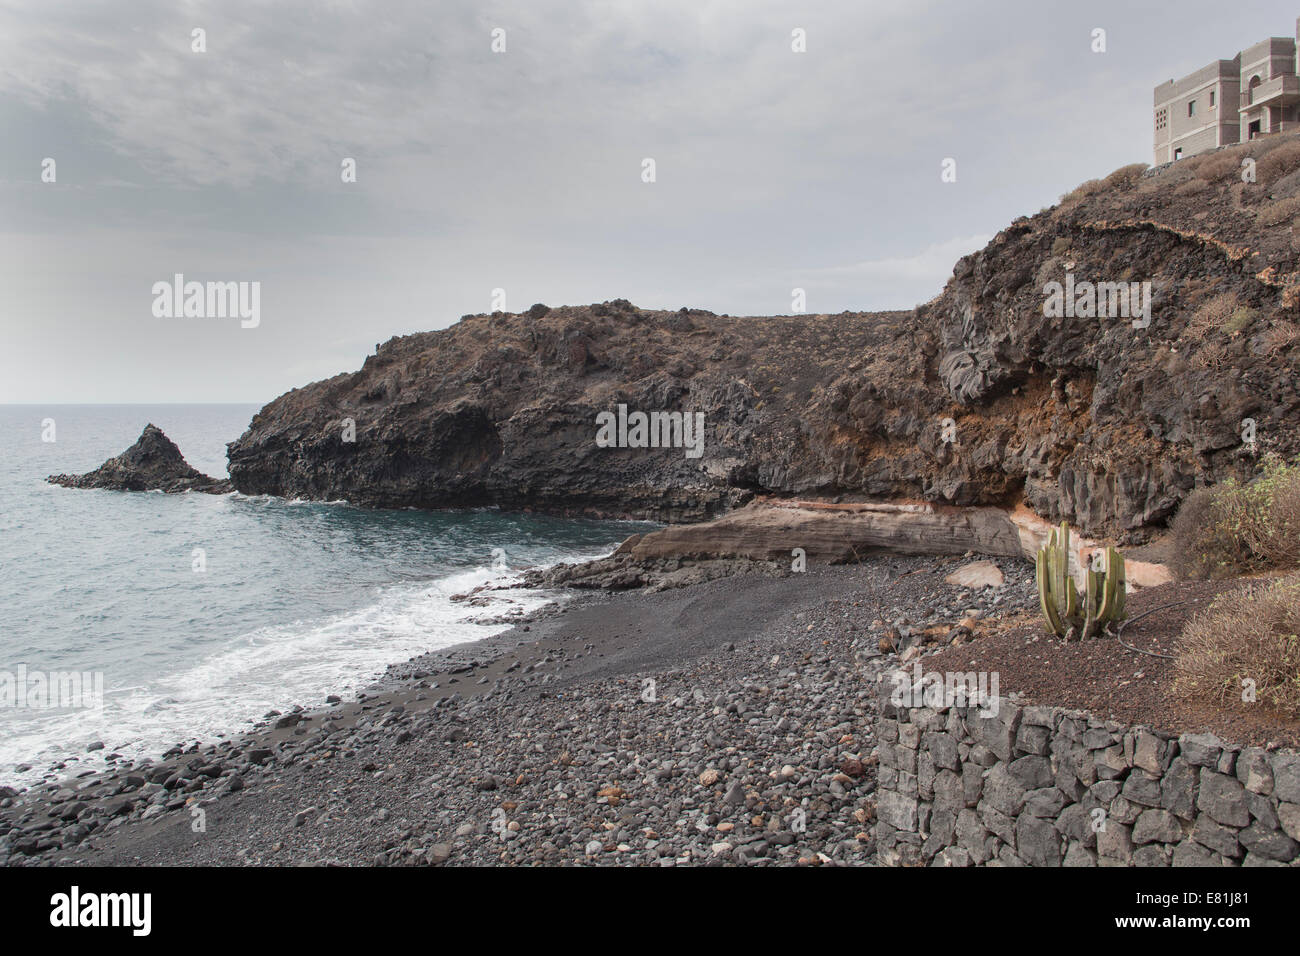 Canary Islands Tenerife rocky beach waves break Stock Photo